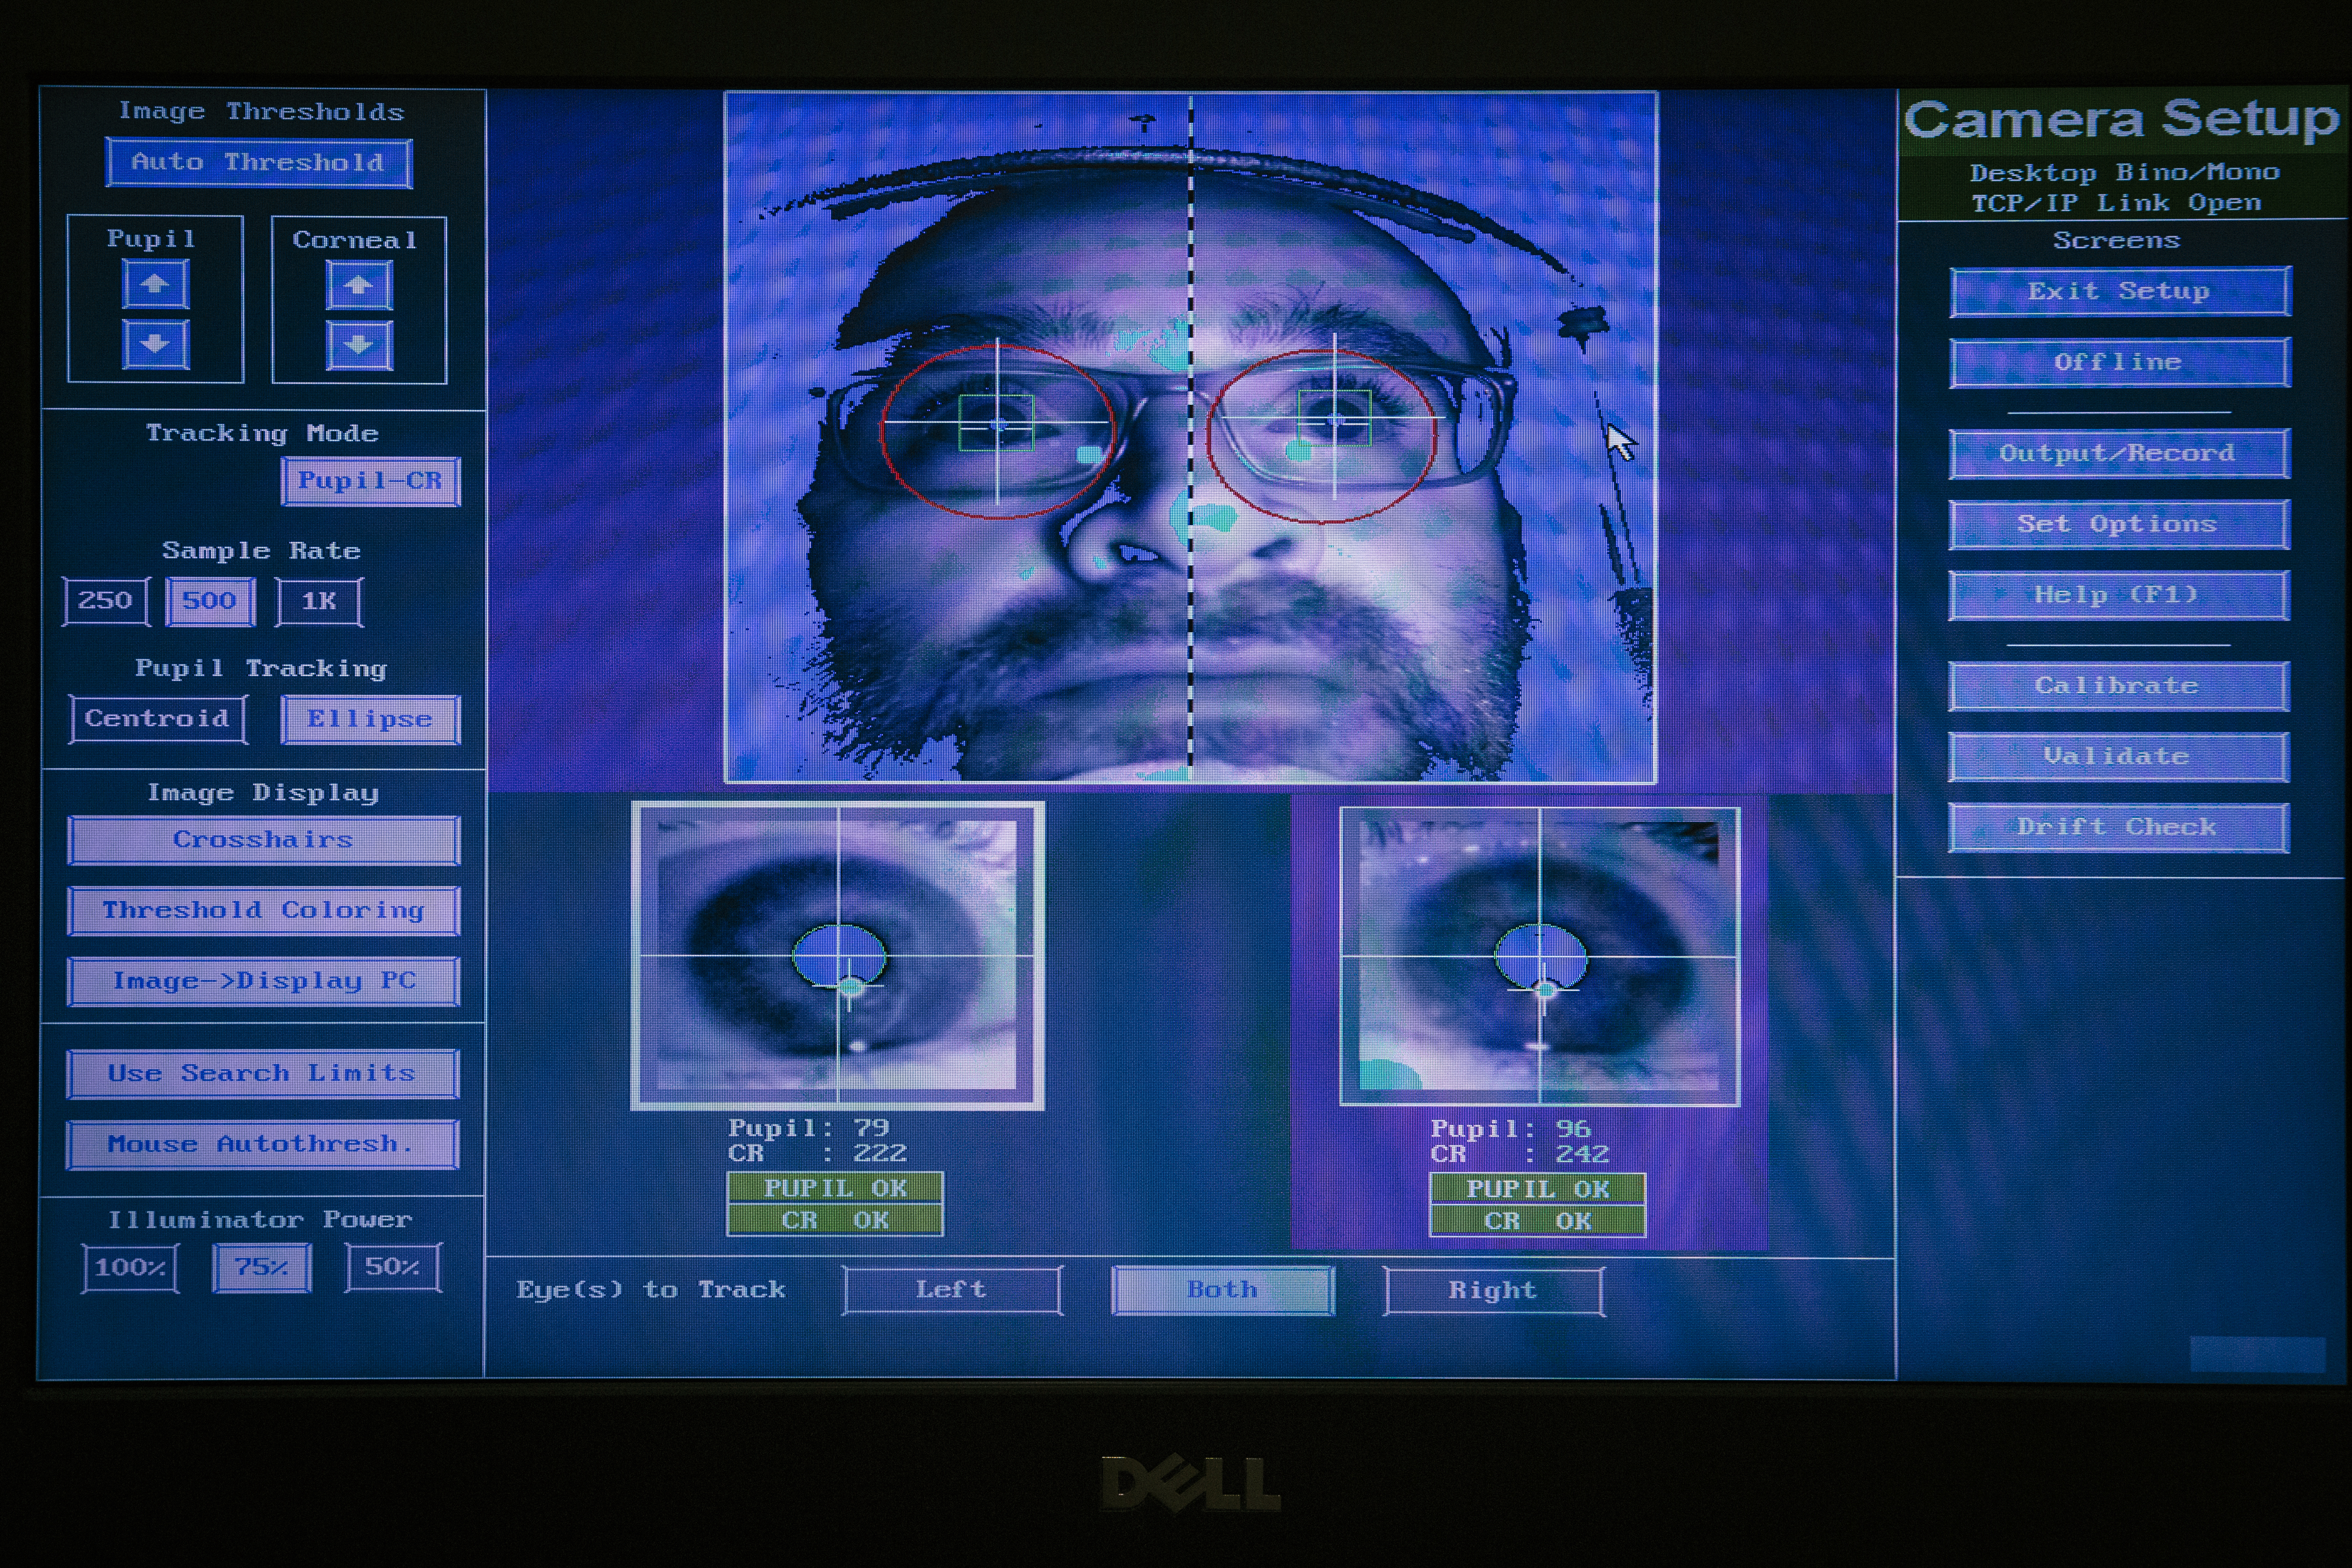 Image shows a screenshot of eye tracking analysis data.